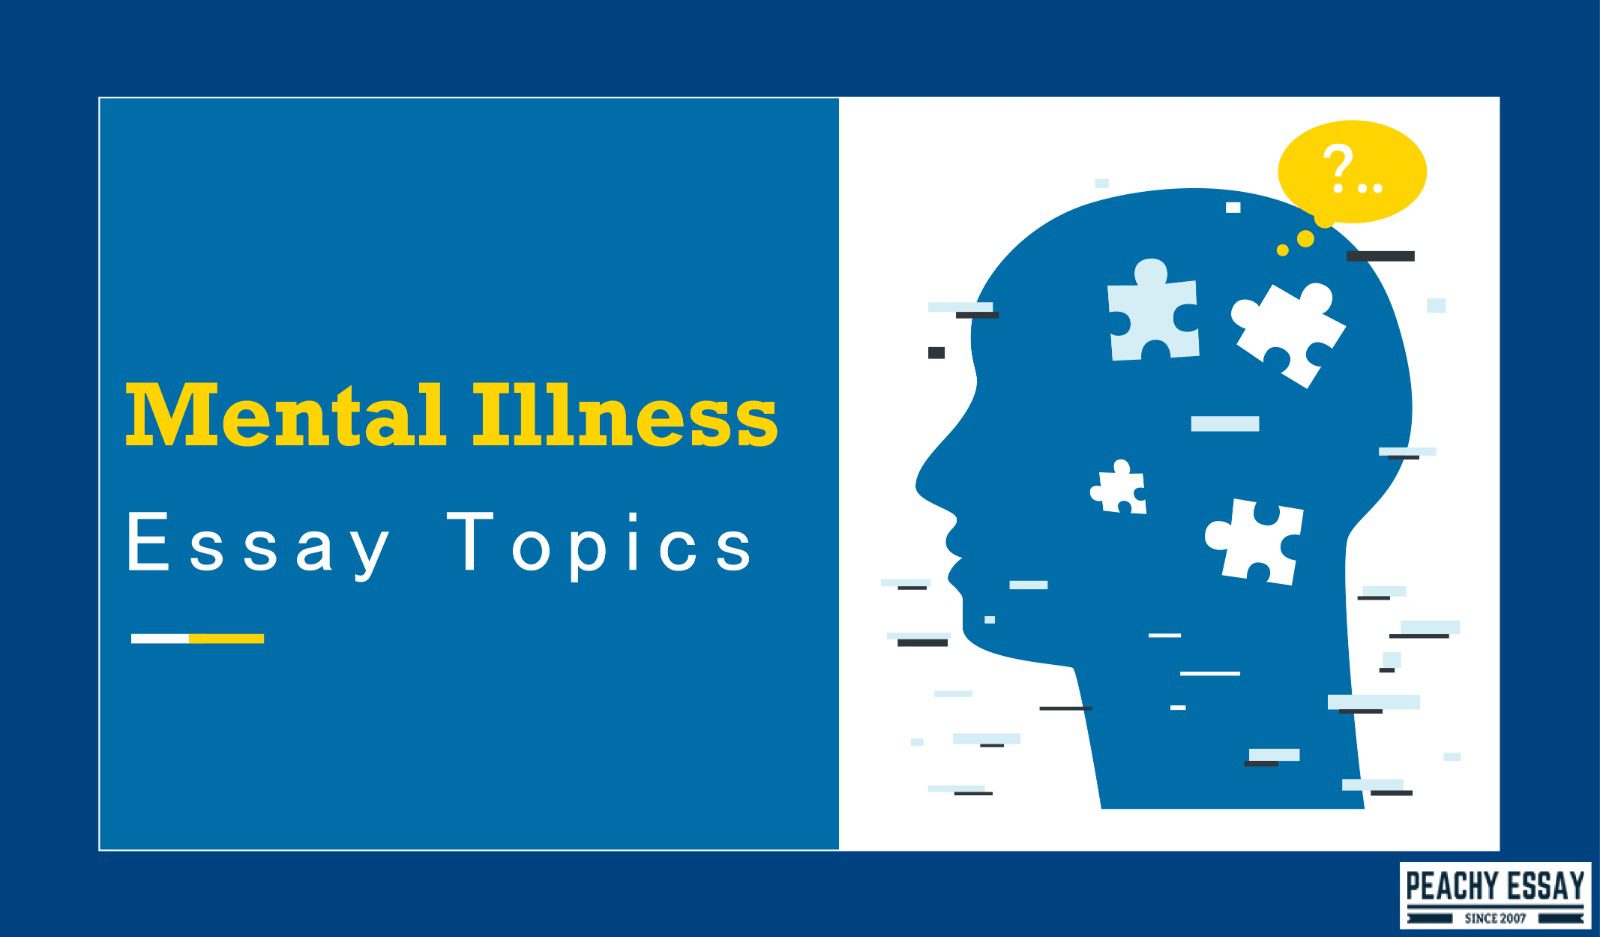 essay topics related to mental illness